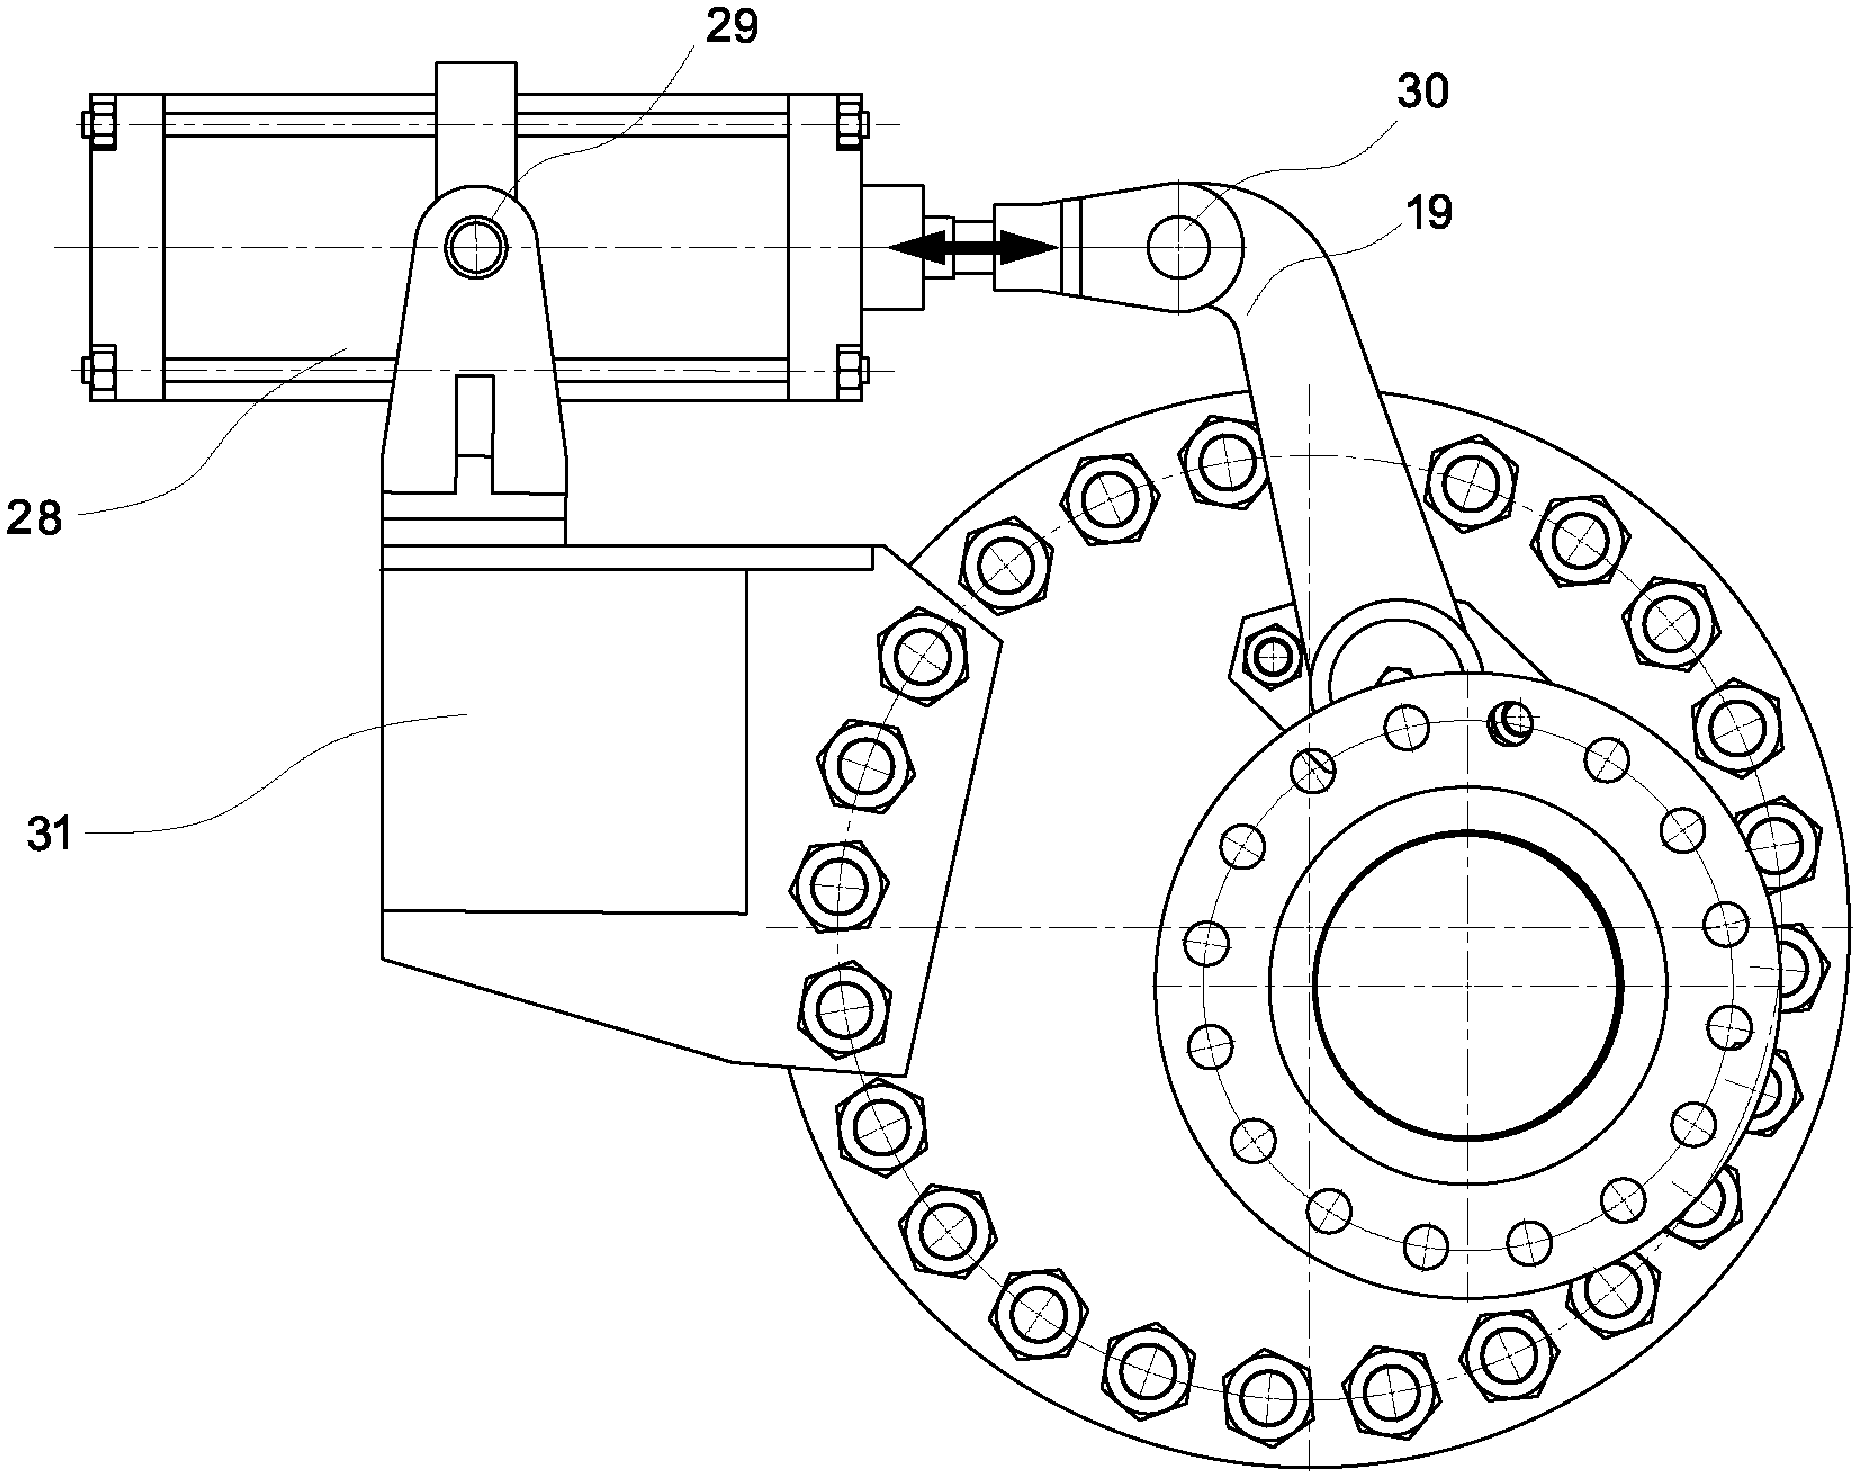 Single-disk valve